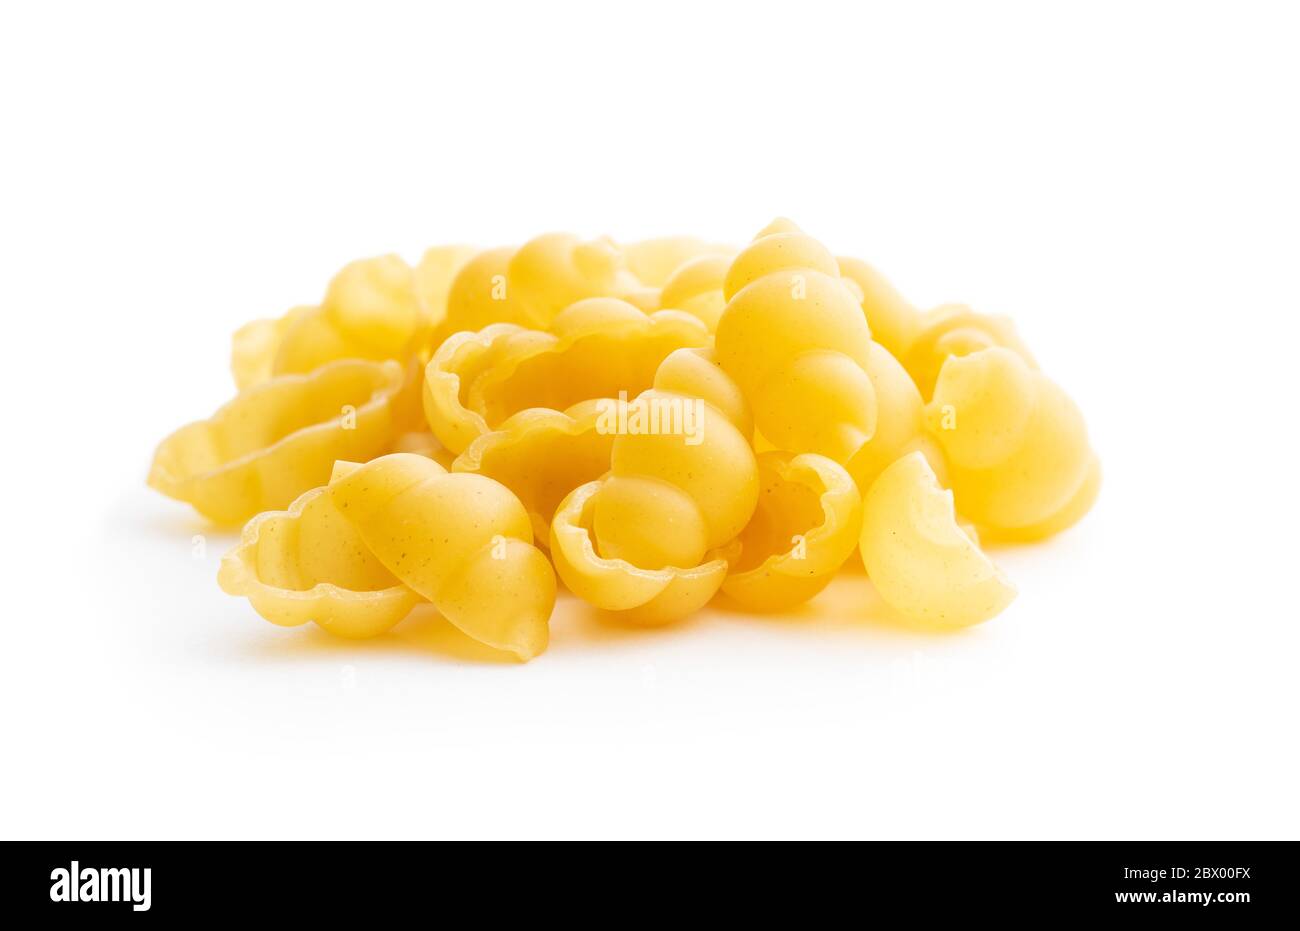 Gnocchi, raw italian pasta. Dried pasta isolated on white background. Stock Photo